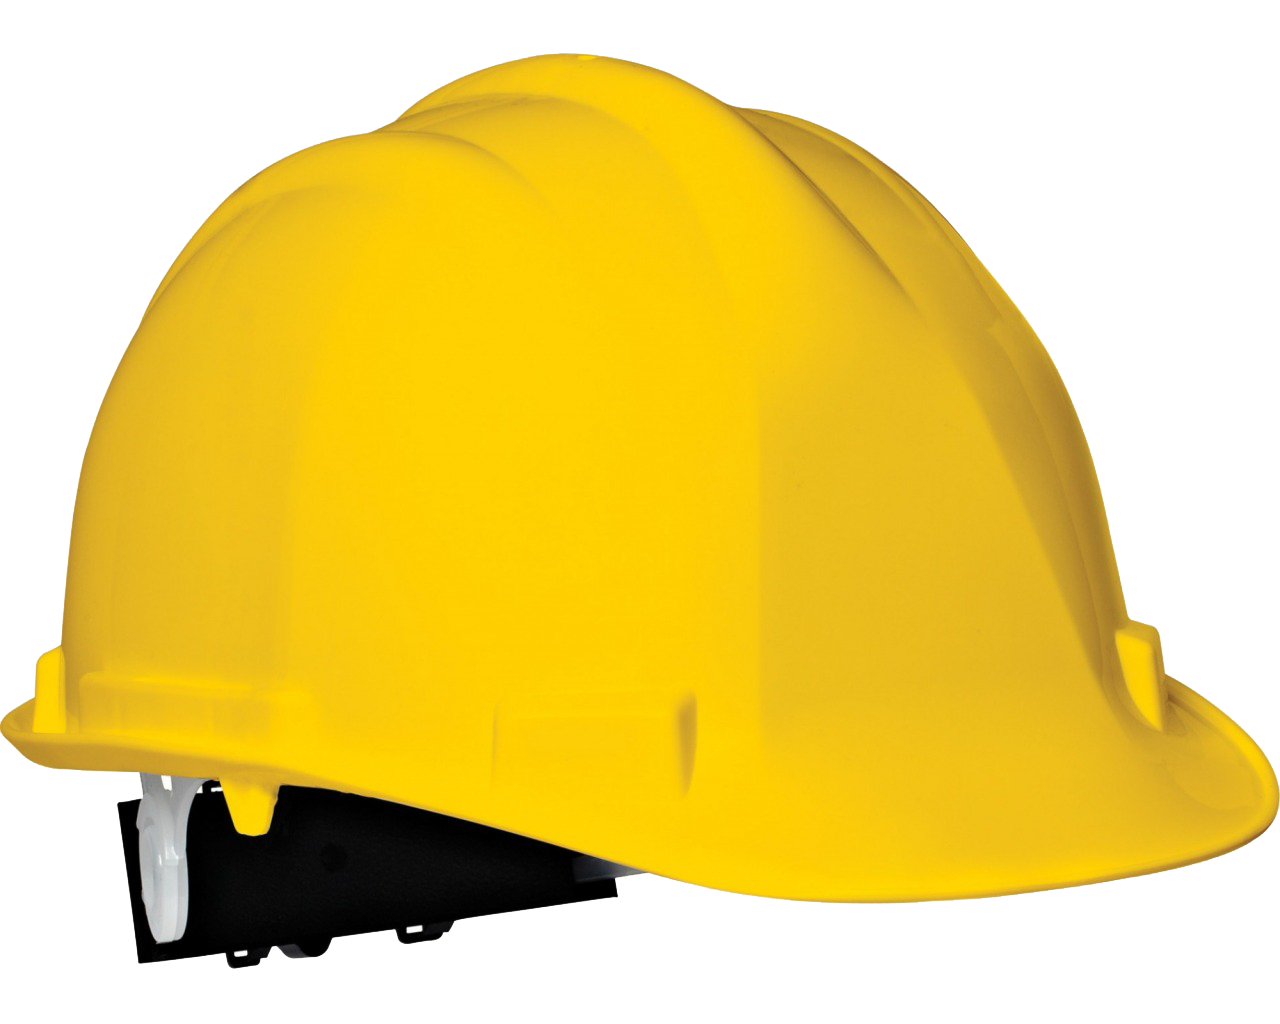 Safety Helmet PNG Transparent Picture